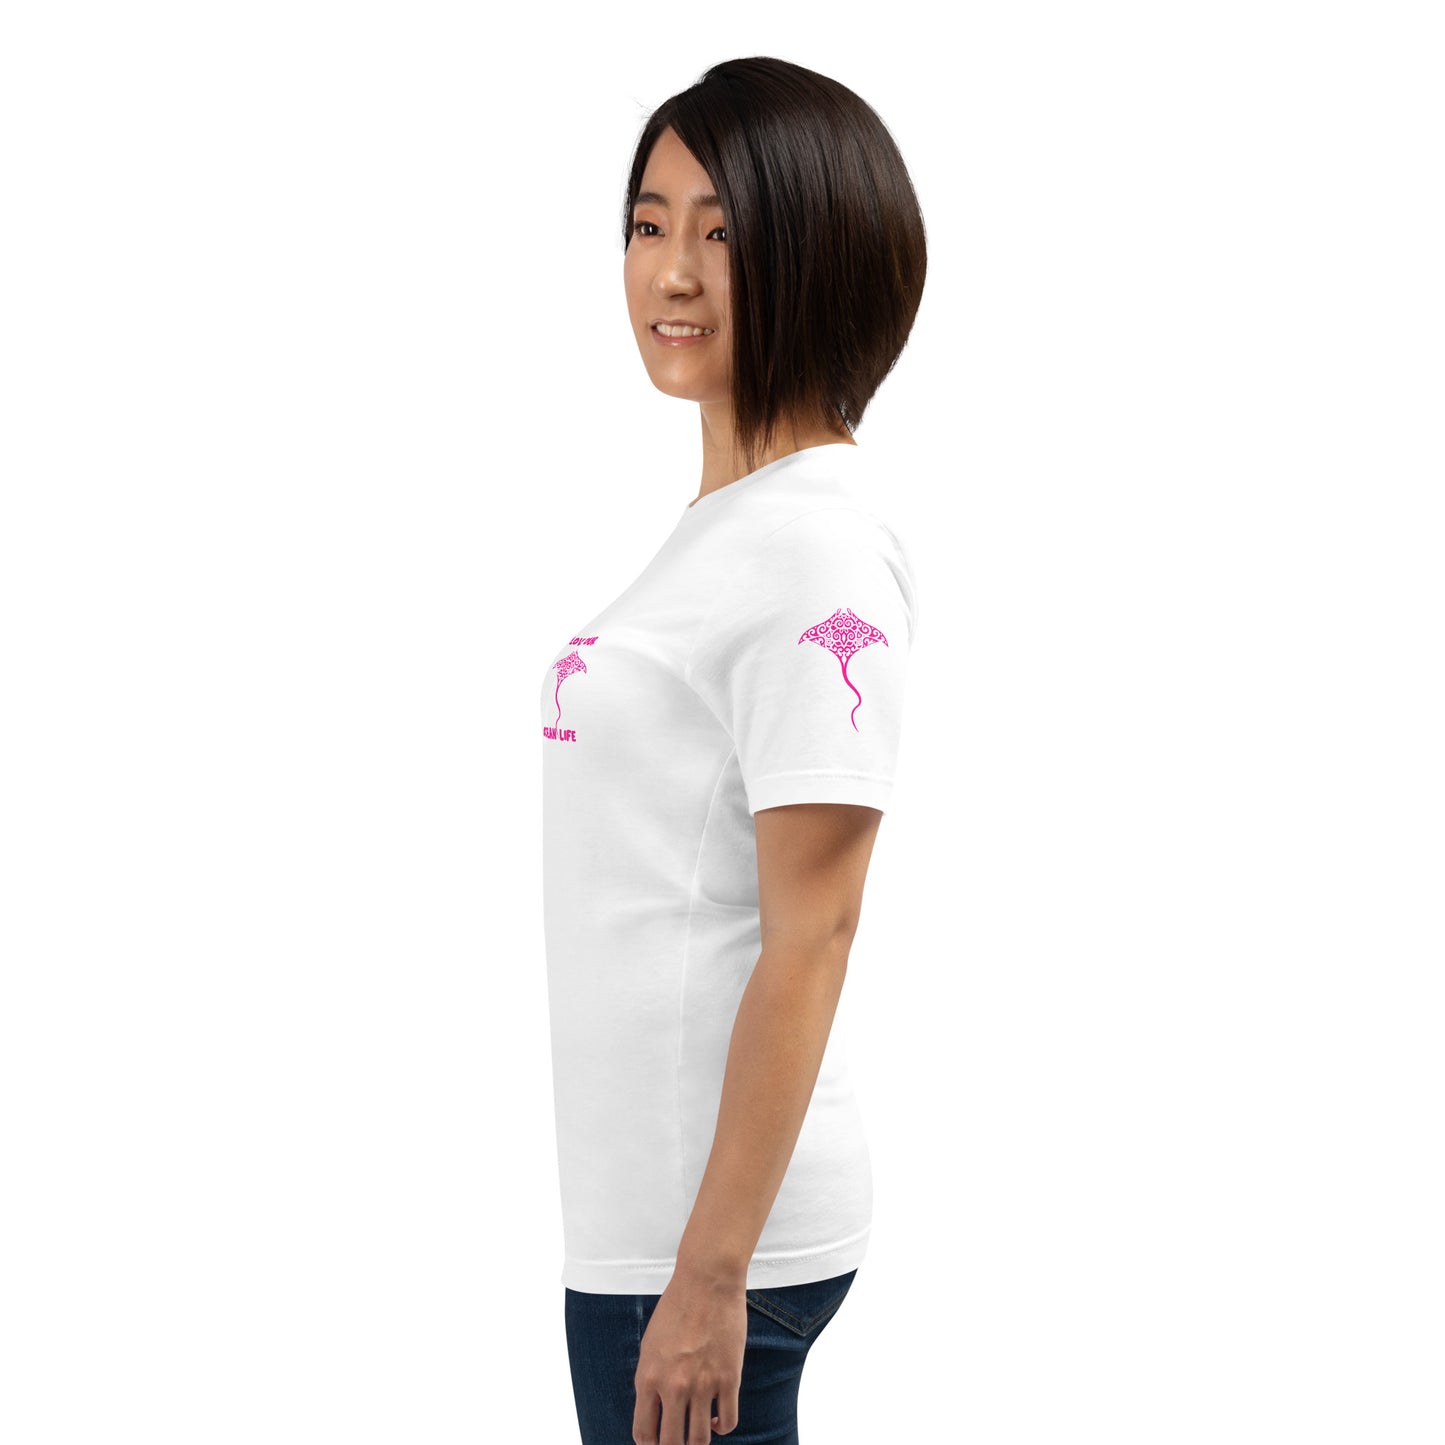 Polynesian T-shirt Manta Ray Tribal Samoan For Men and Women Left Pink on White